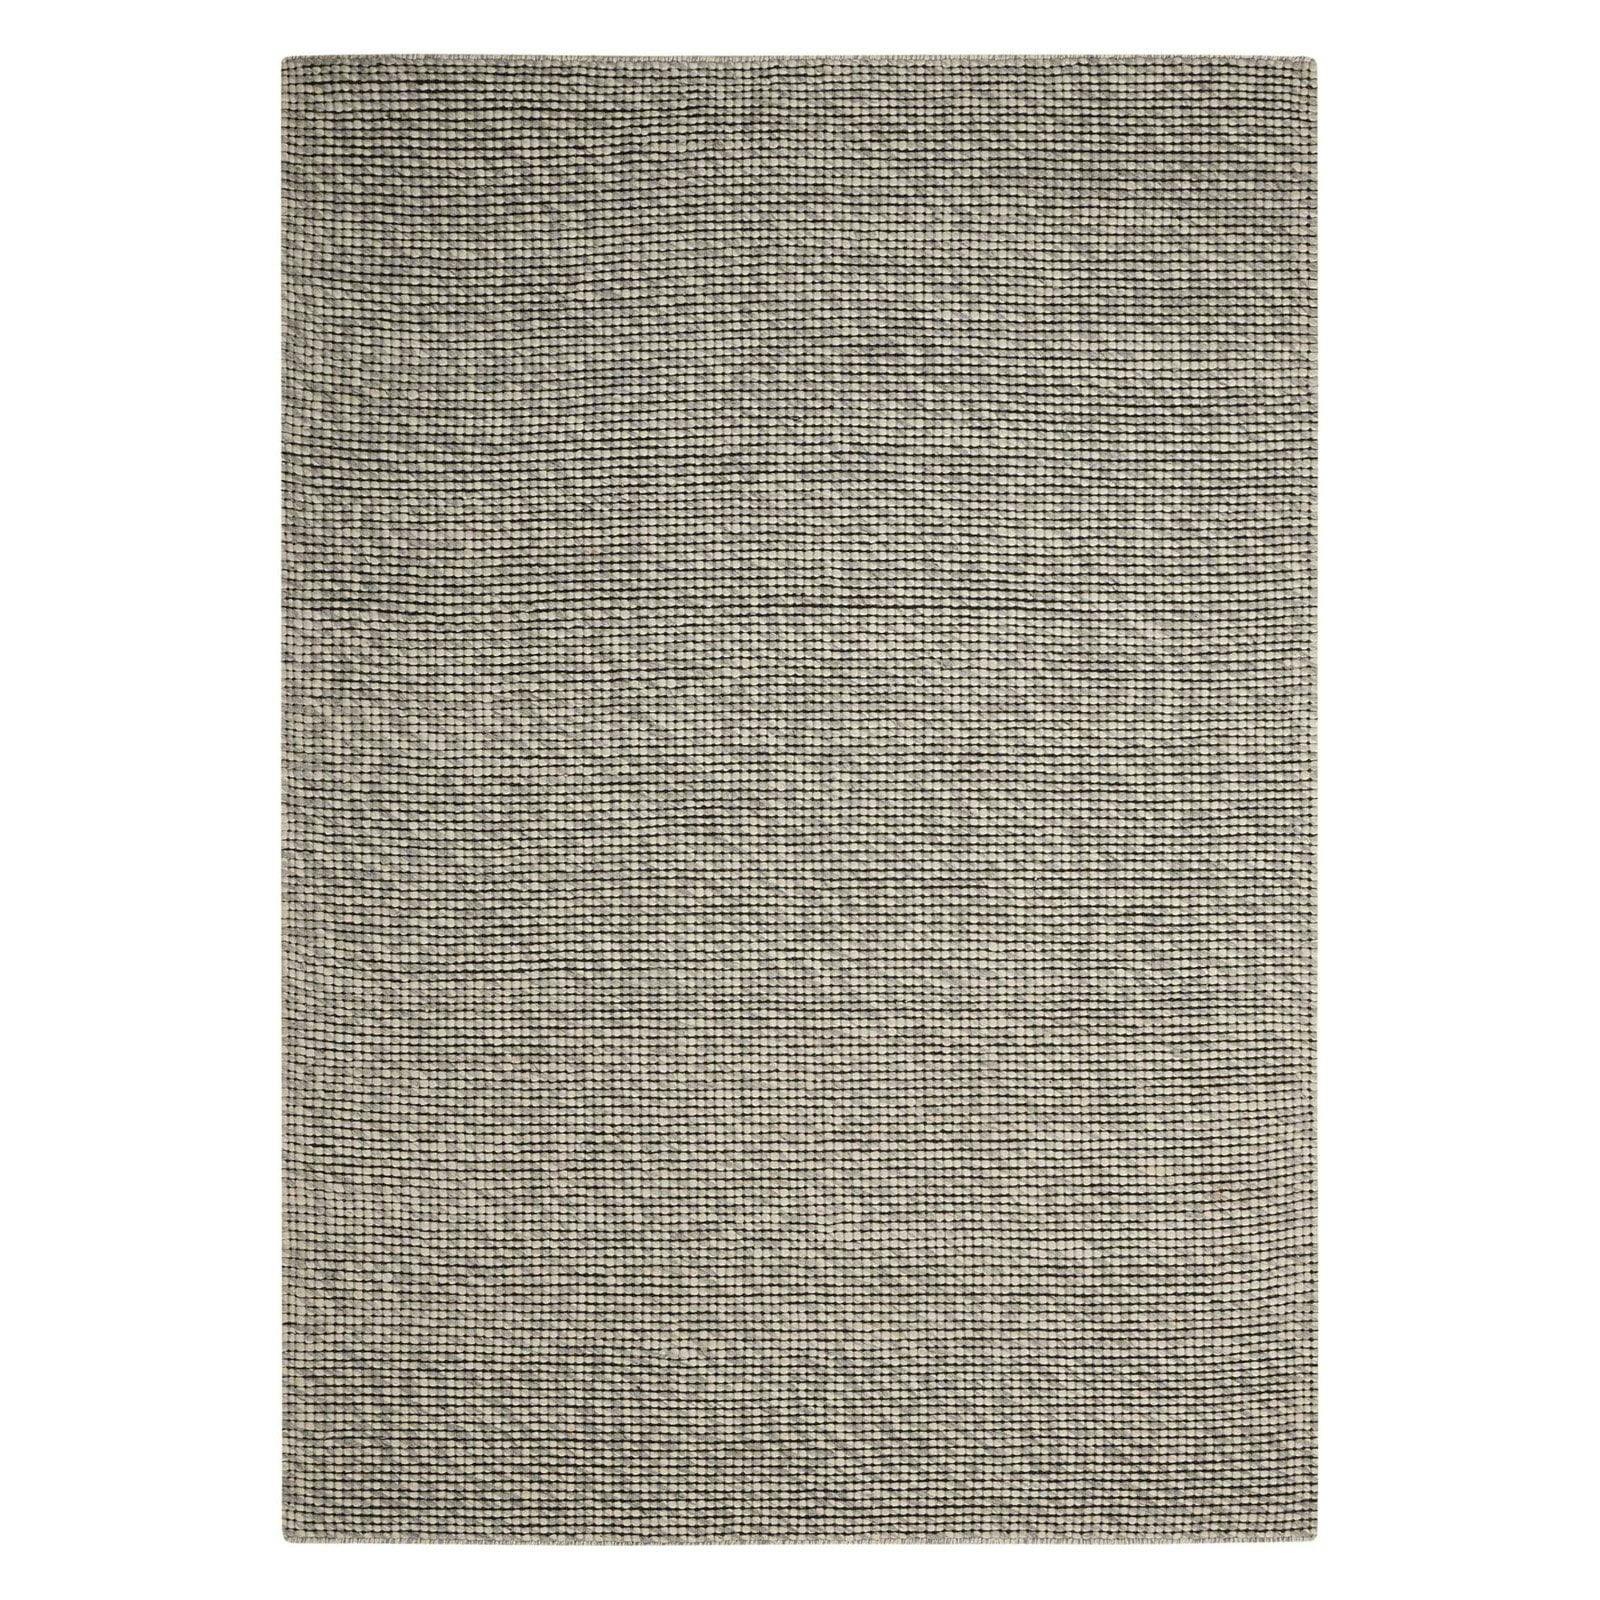 Basalt Gray 8' x 10' Handmade Coastal Wool Blend Area Rug